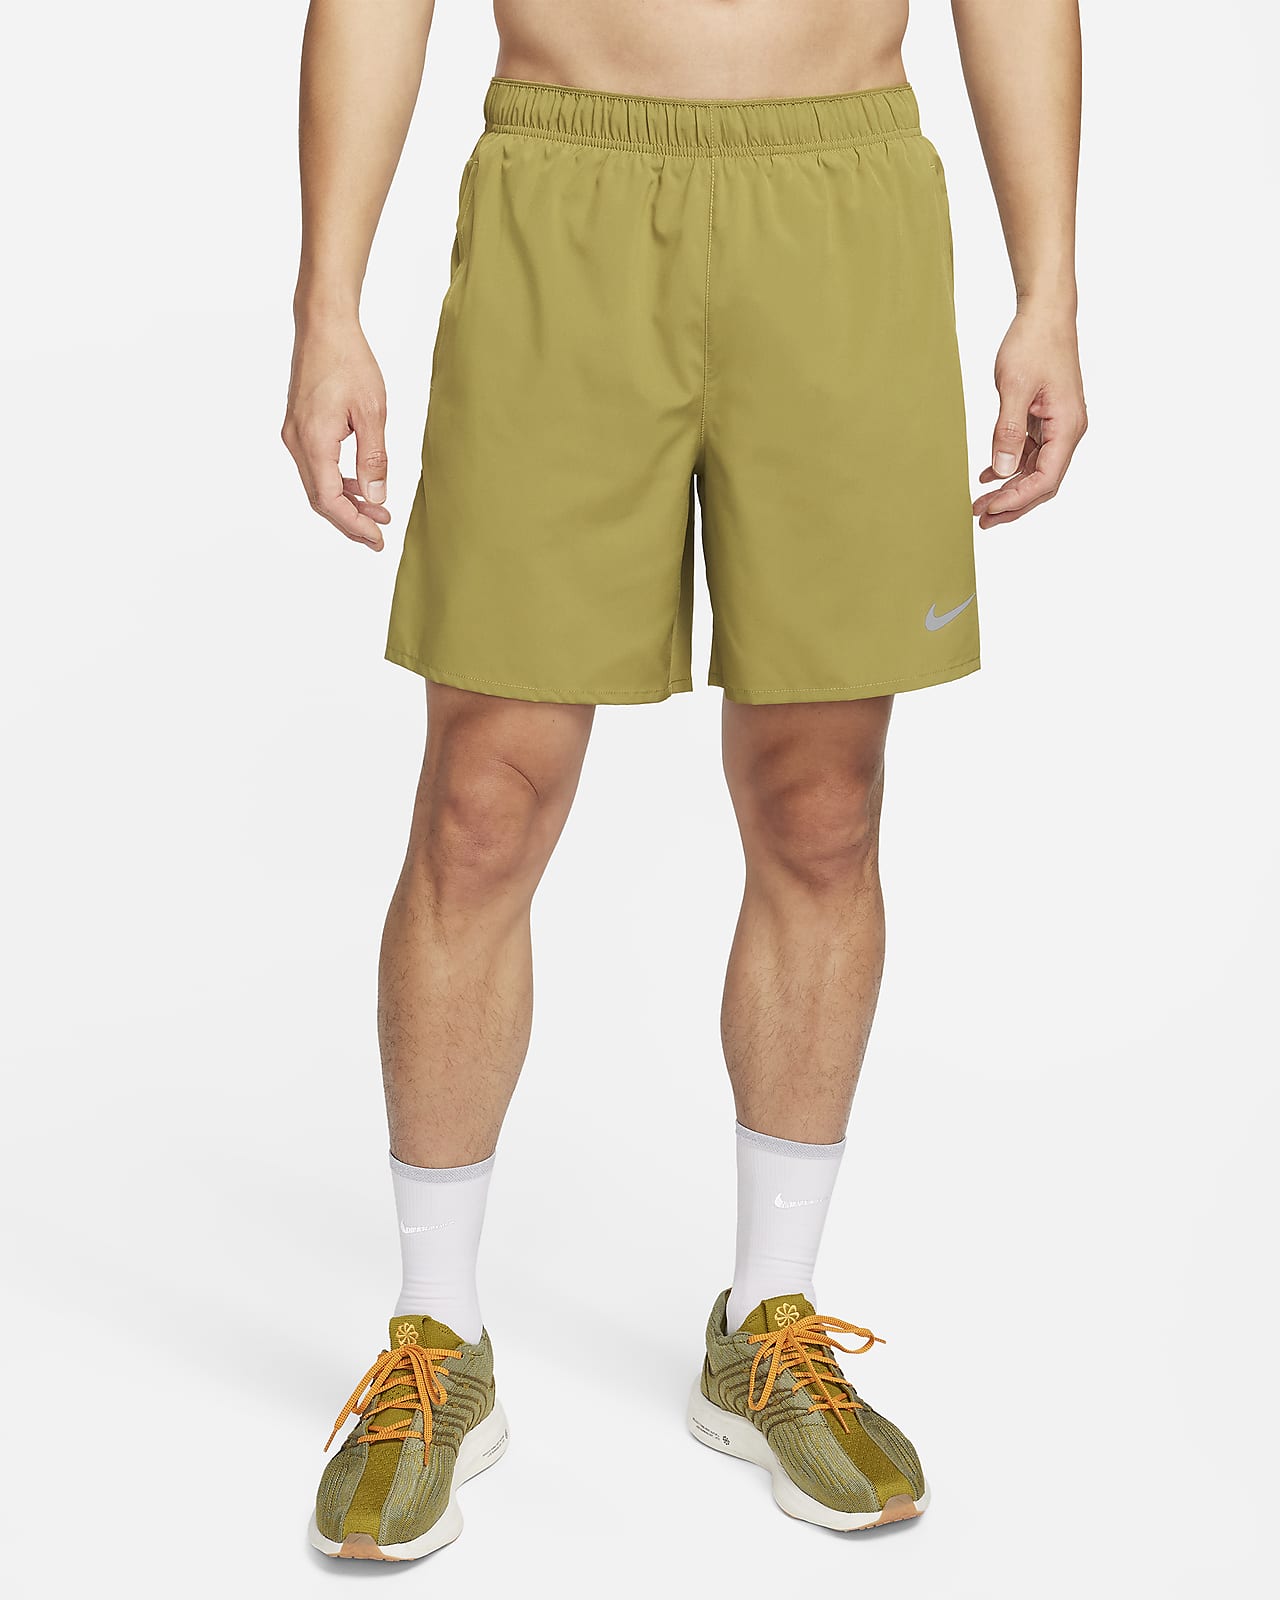 Shorts de running con forro de ropa interior Dri-FIT de 18 cm para hombre Nike Challenger